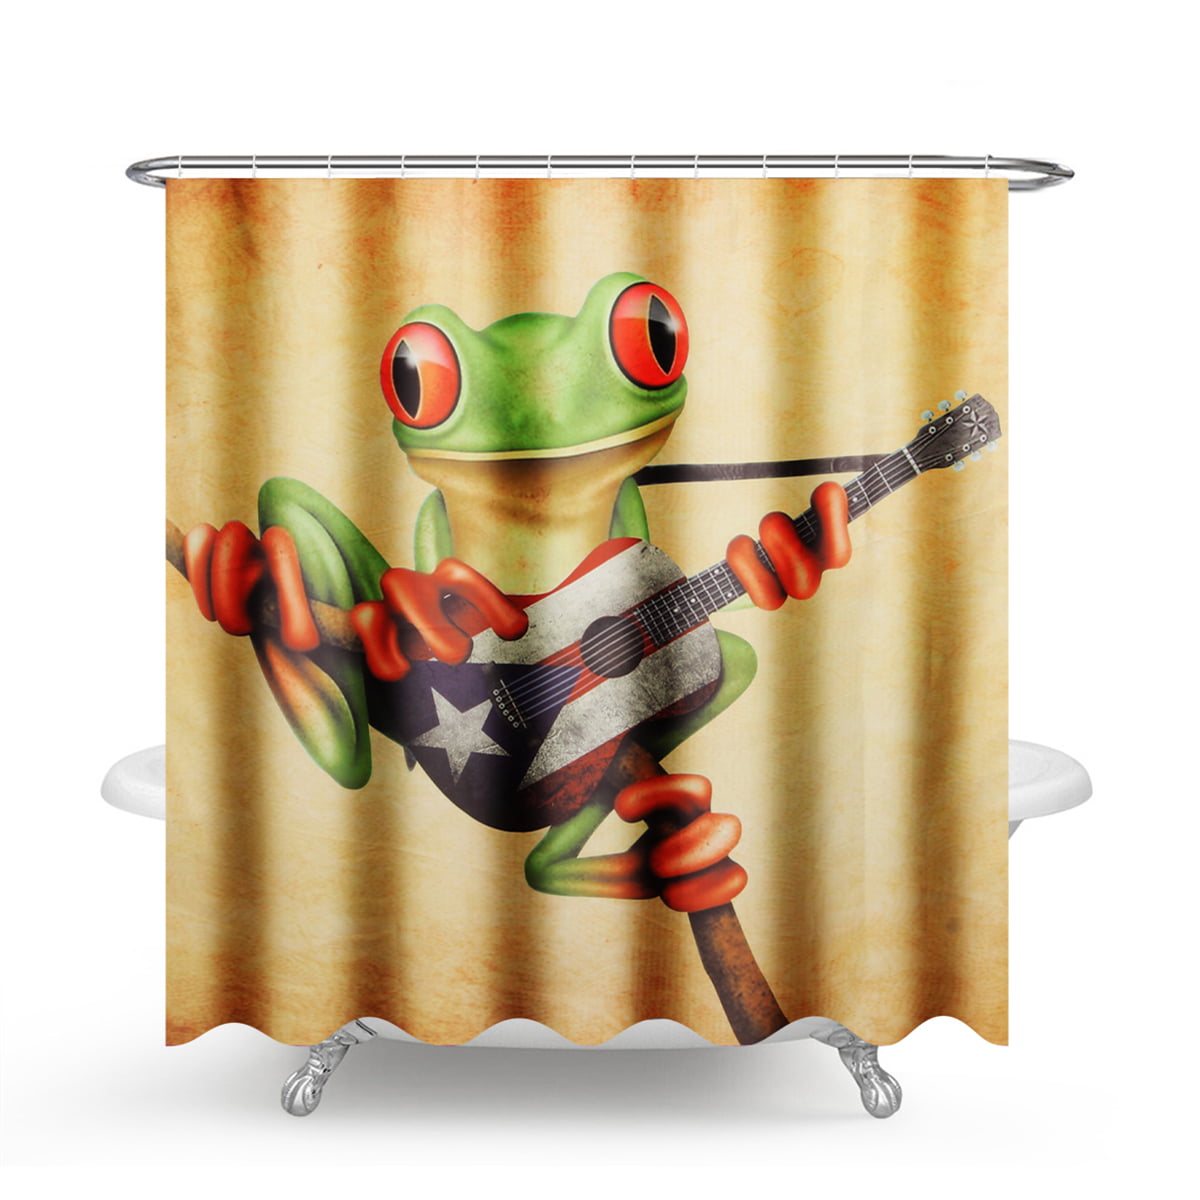 Frog Shower Curtain Set Bathroom Rug Thick Bath Mat Non-Slip Toilet Lid Cover 